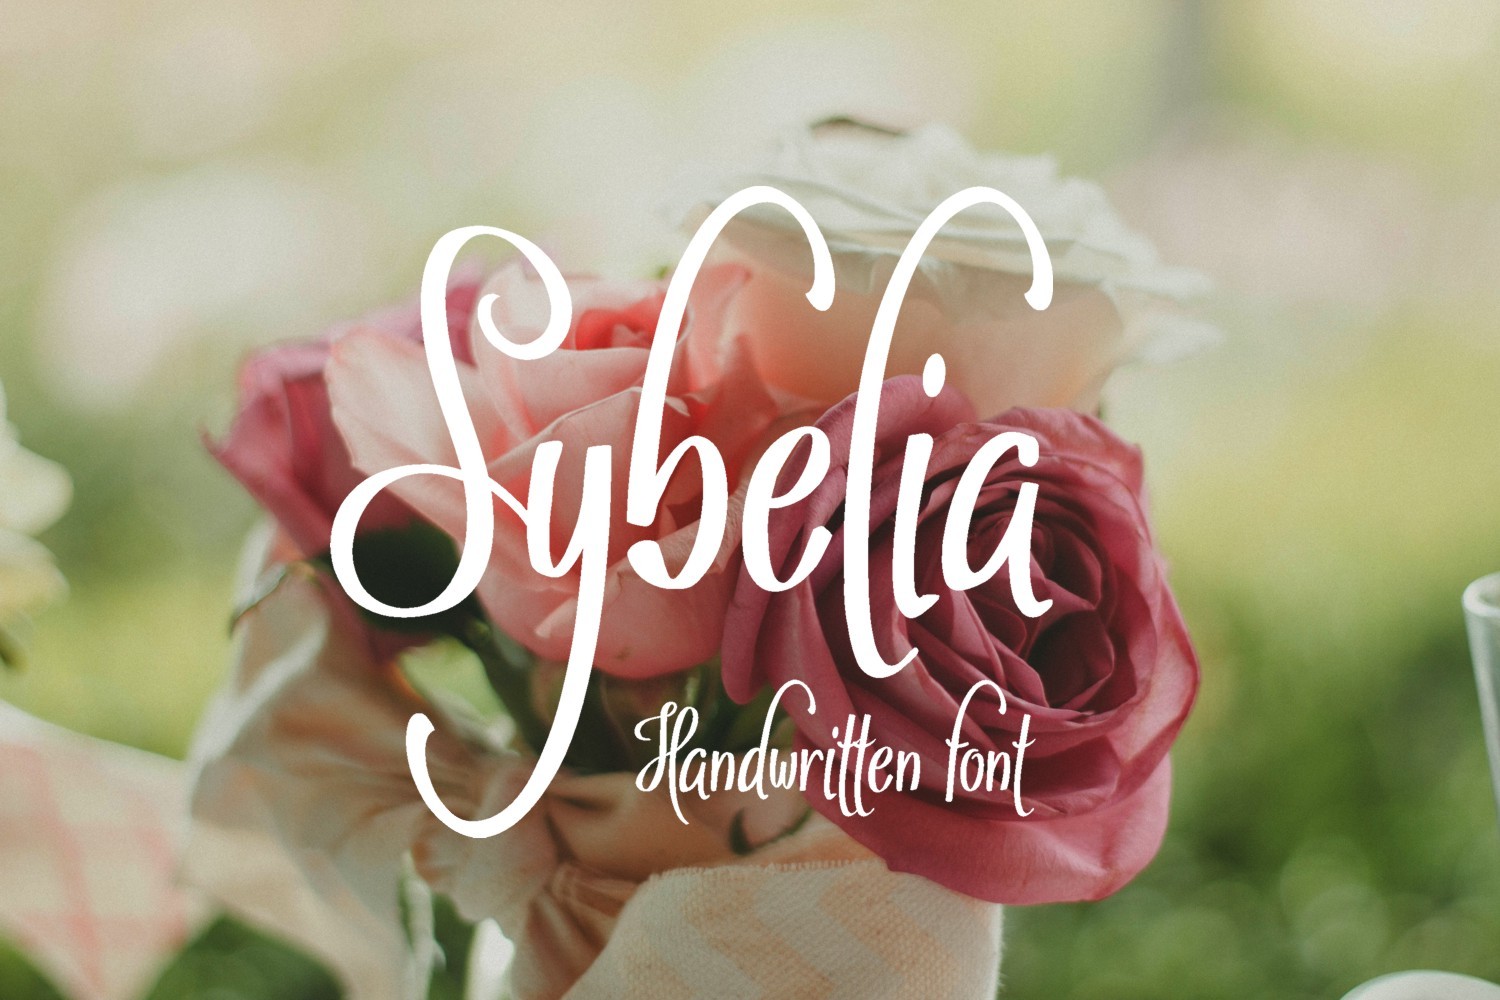 Sybelia